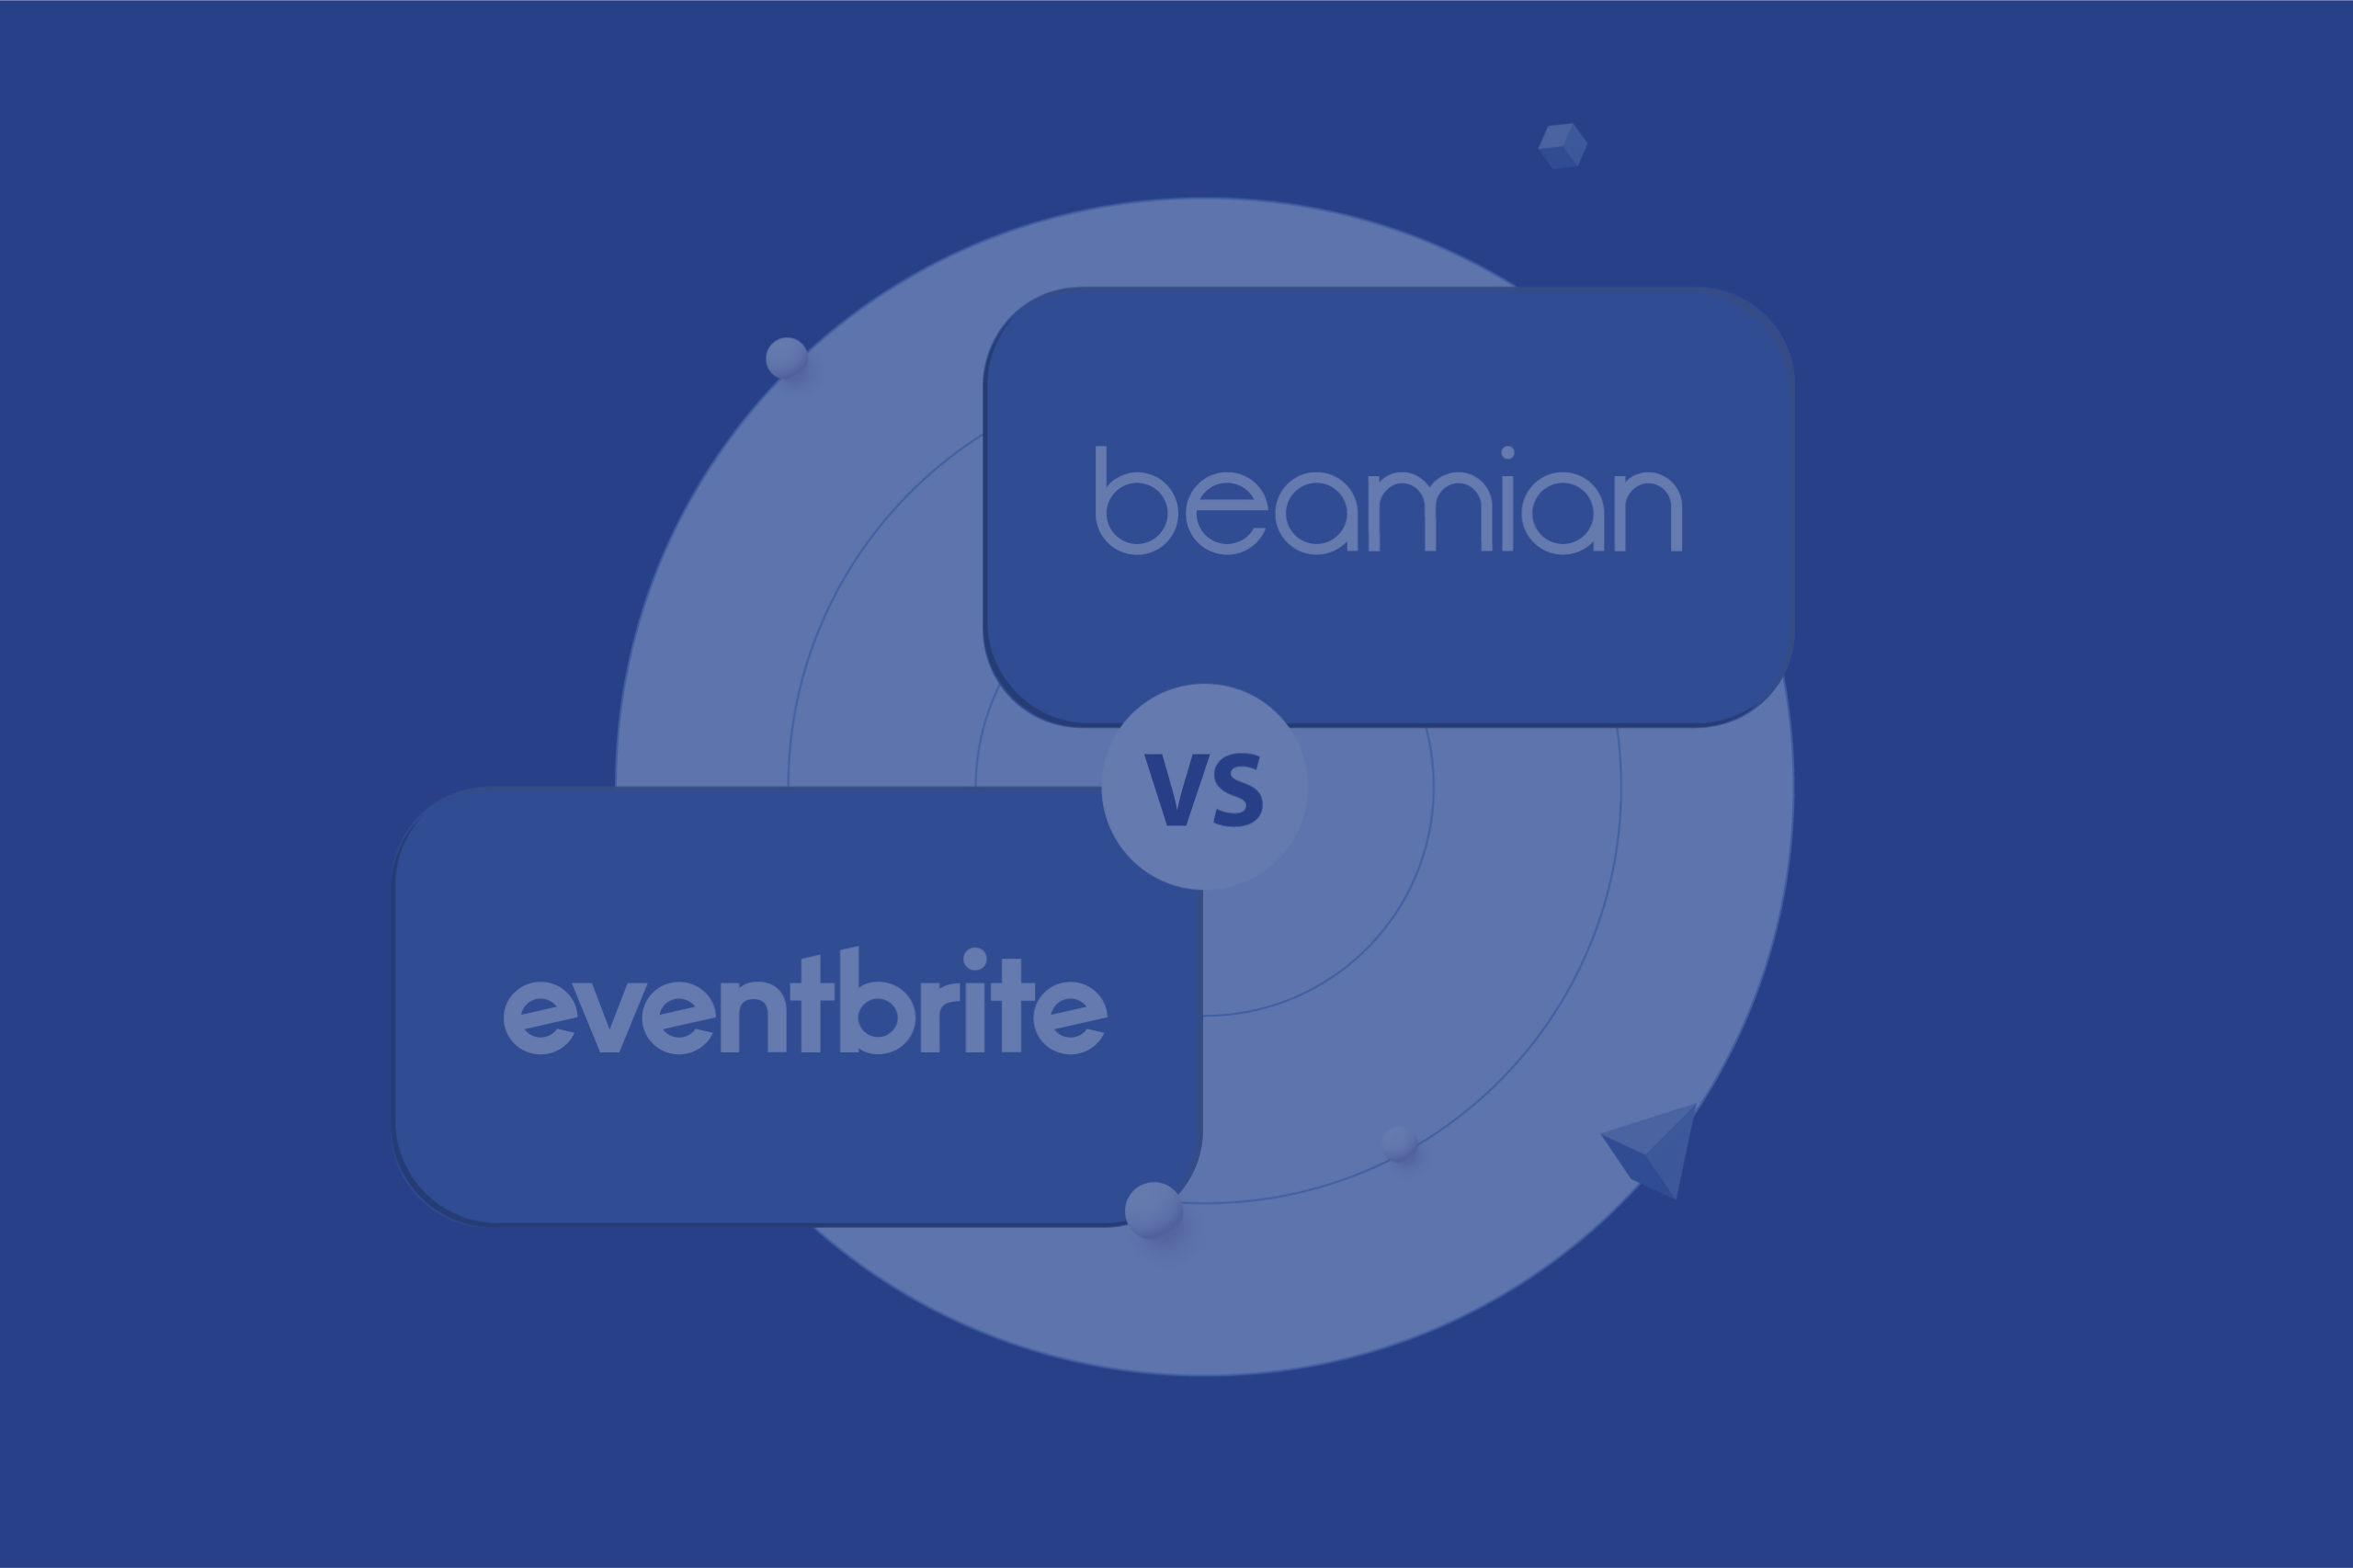 Seite-an-Seite-Vergleich: Eventbrite vs. beamian